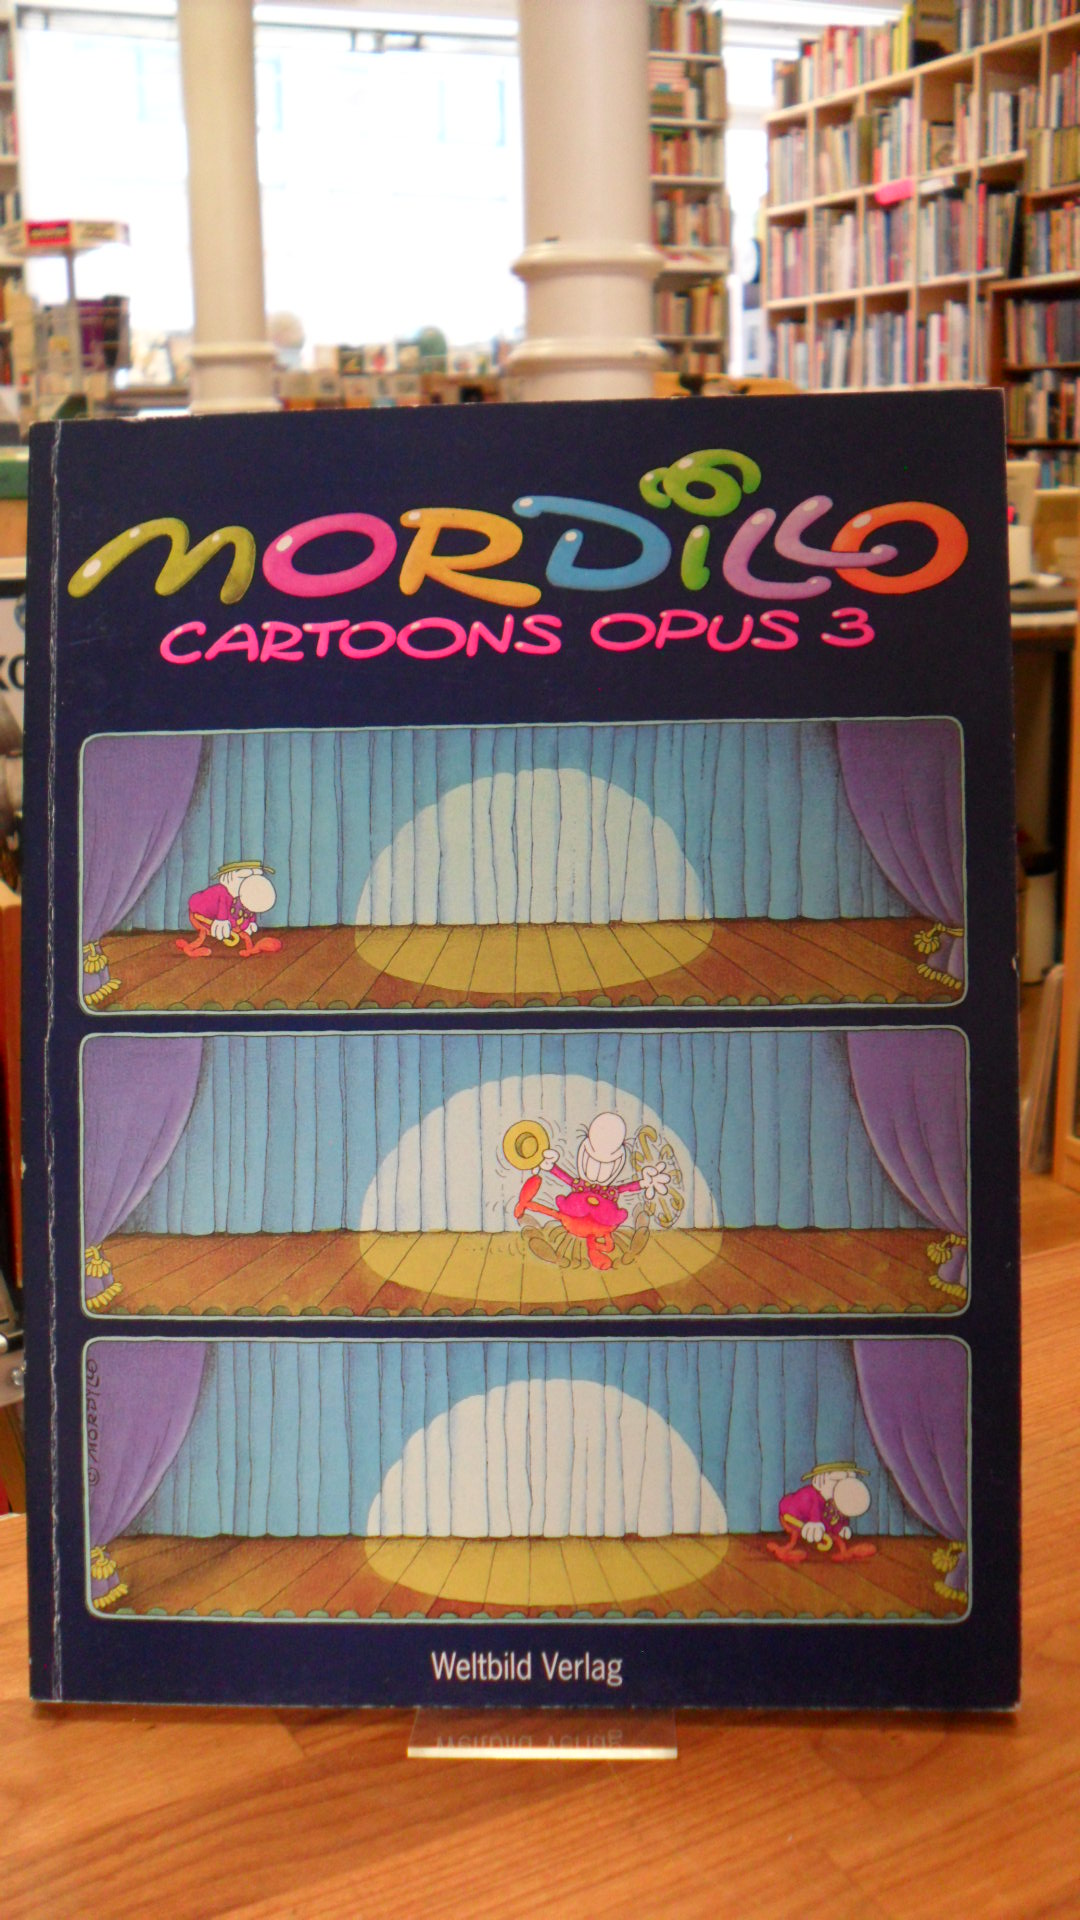 Mordillo, Mordillo Cartoons Opus 3,